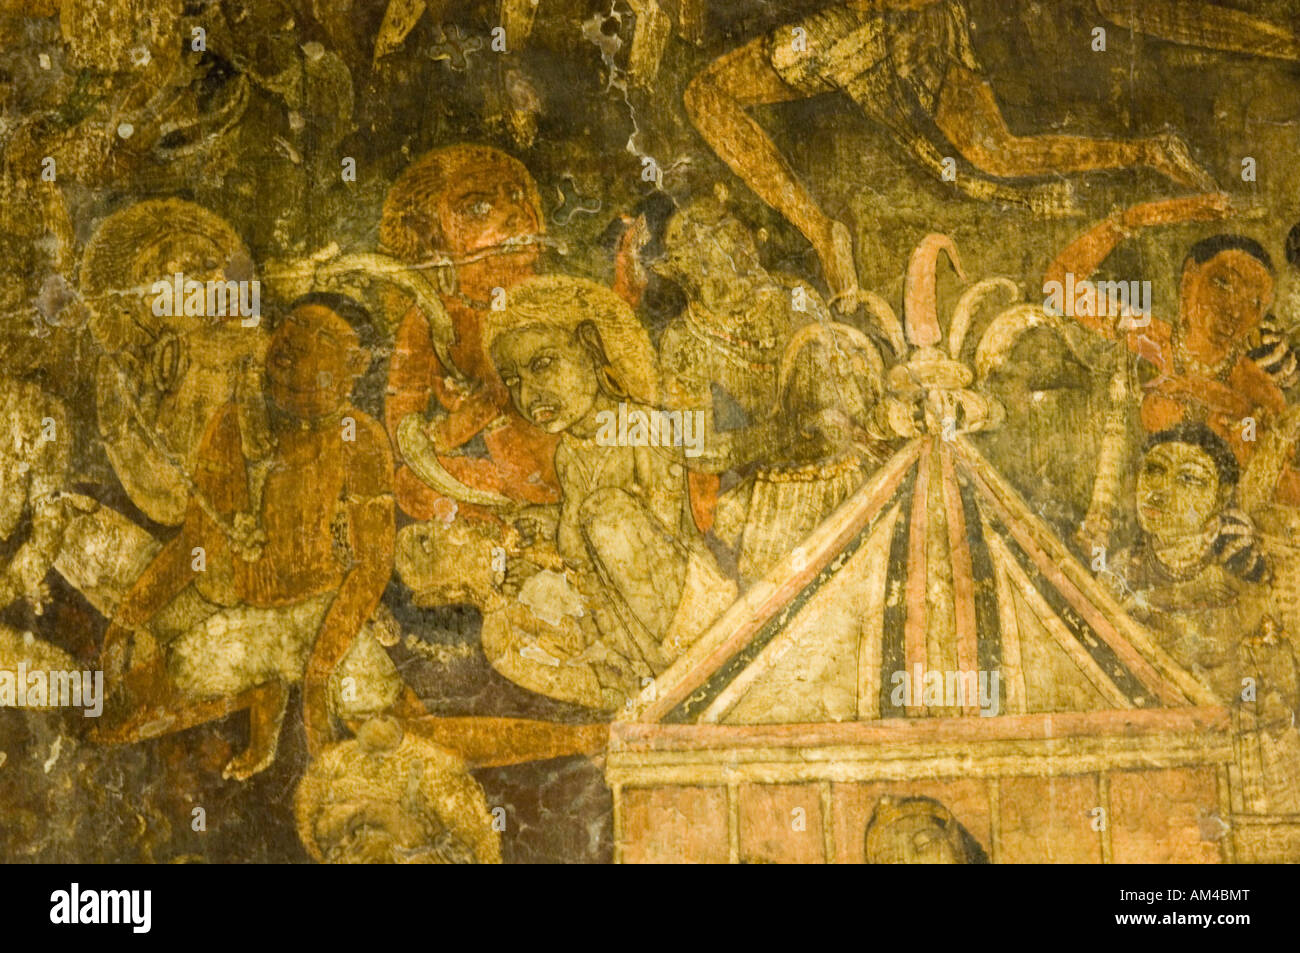 close-up-of-a-mural-in-a-cave-ajanta-maharashtra-india-AM4BMT.jpg